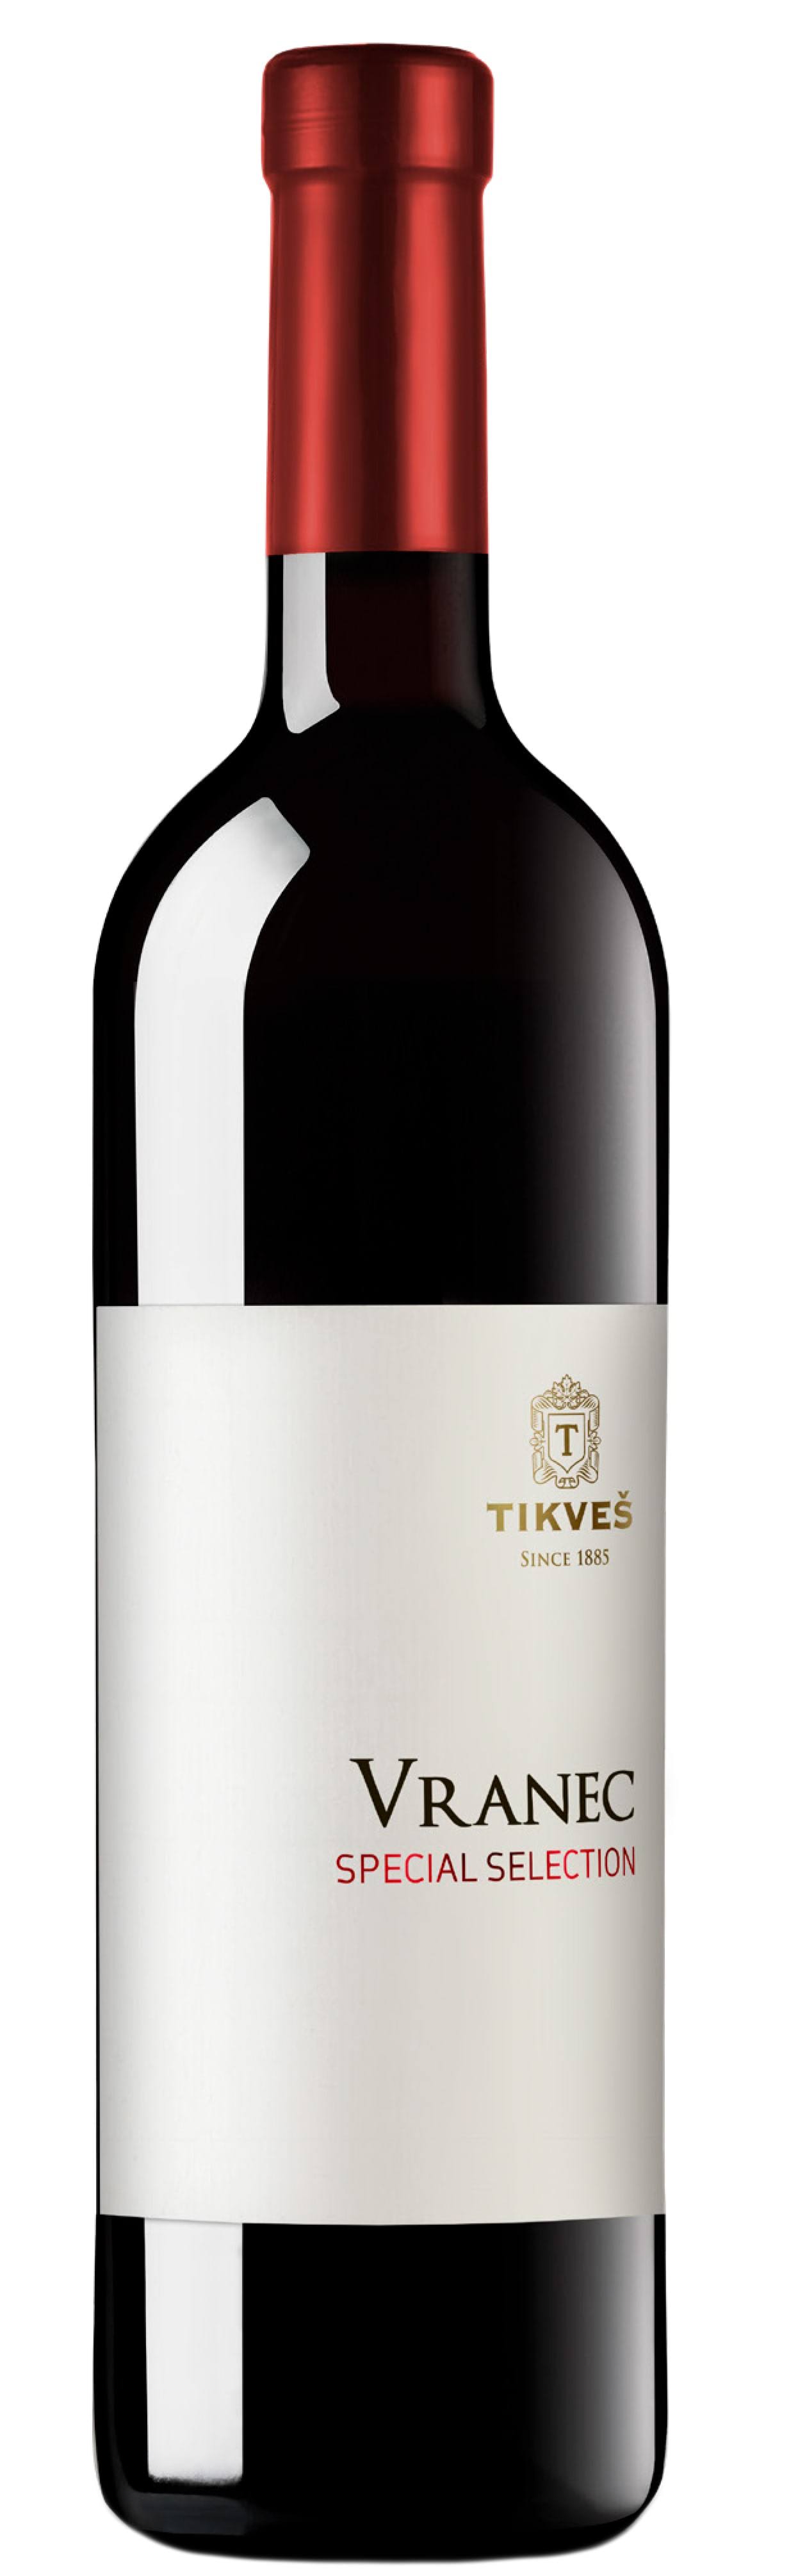 Tikves Vranec Special Selection - 750ml